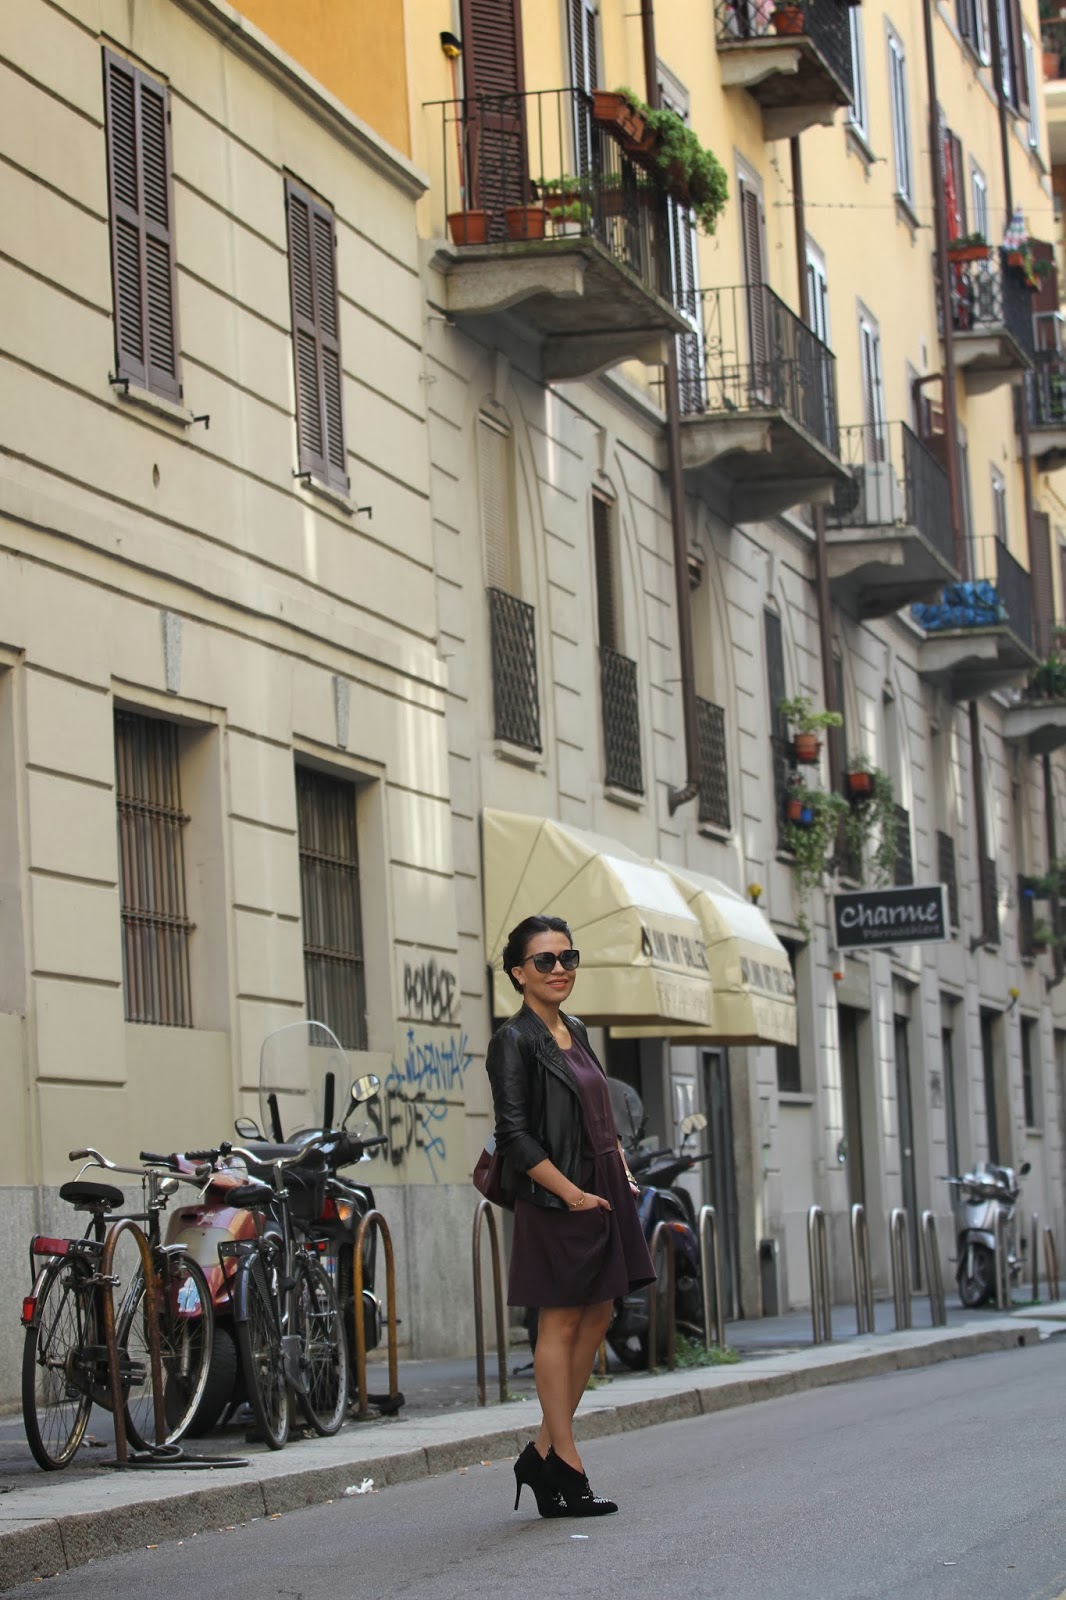 High On Fashion: Ciao Milano!